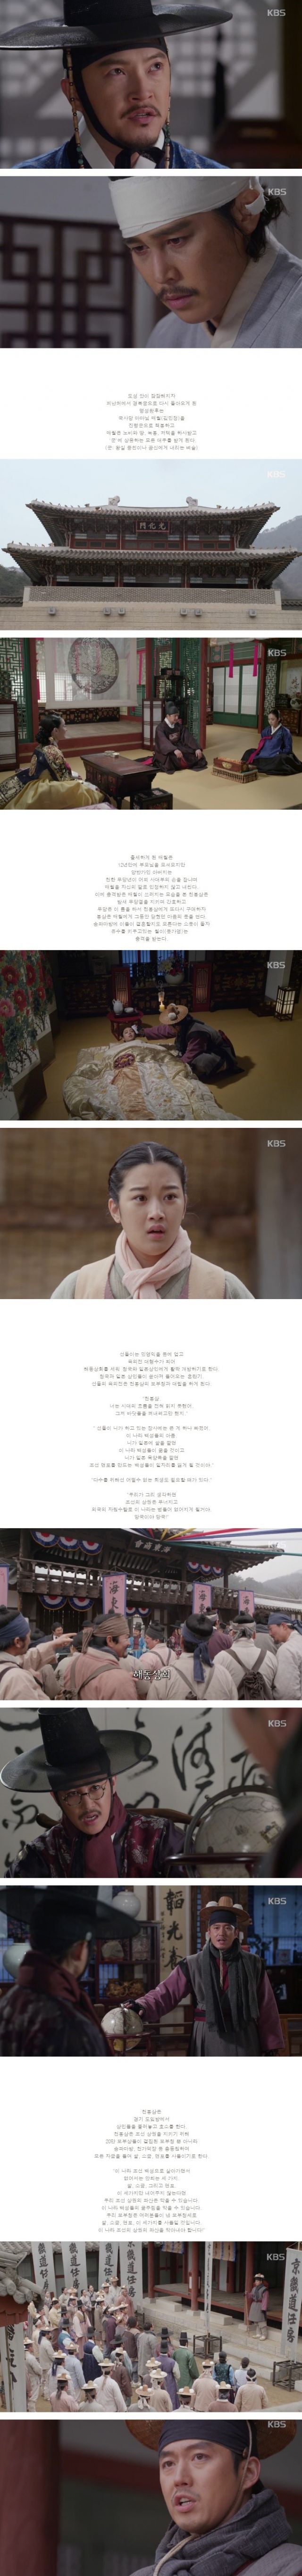 episode 38 captures for the Korean drama 'The Merchant: Gaekju 2015'